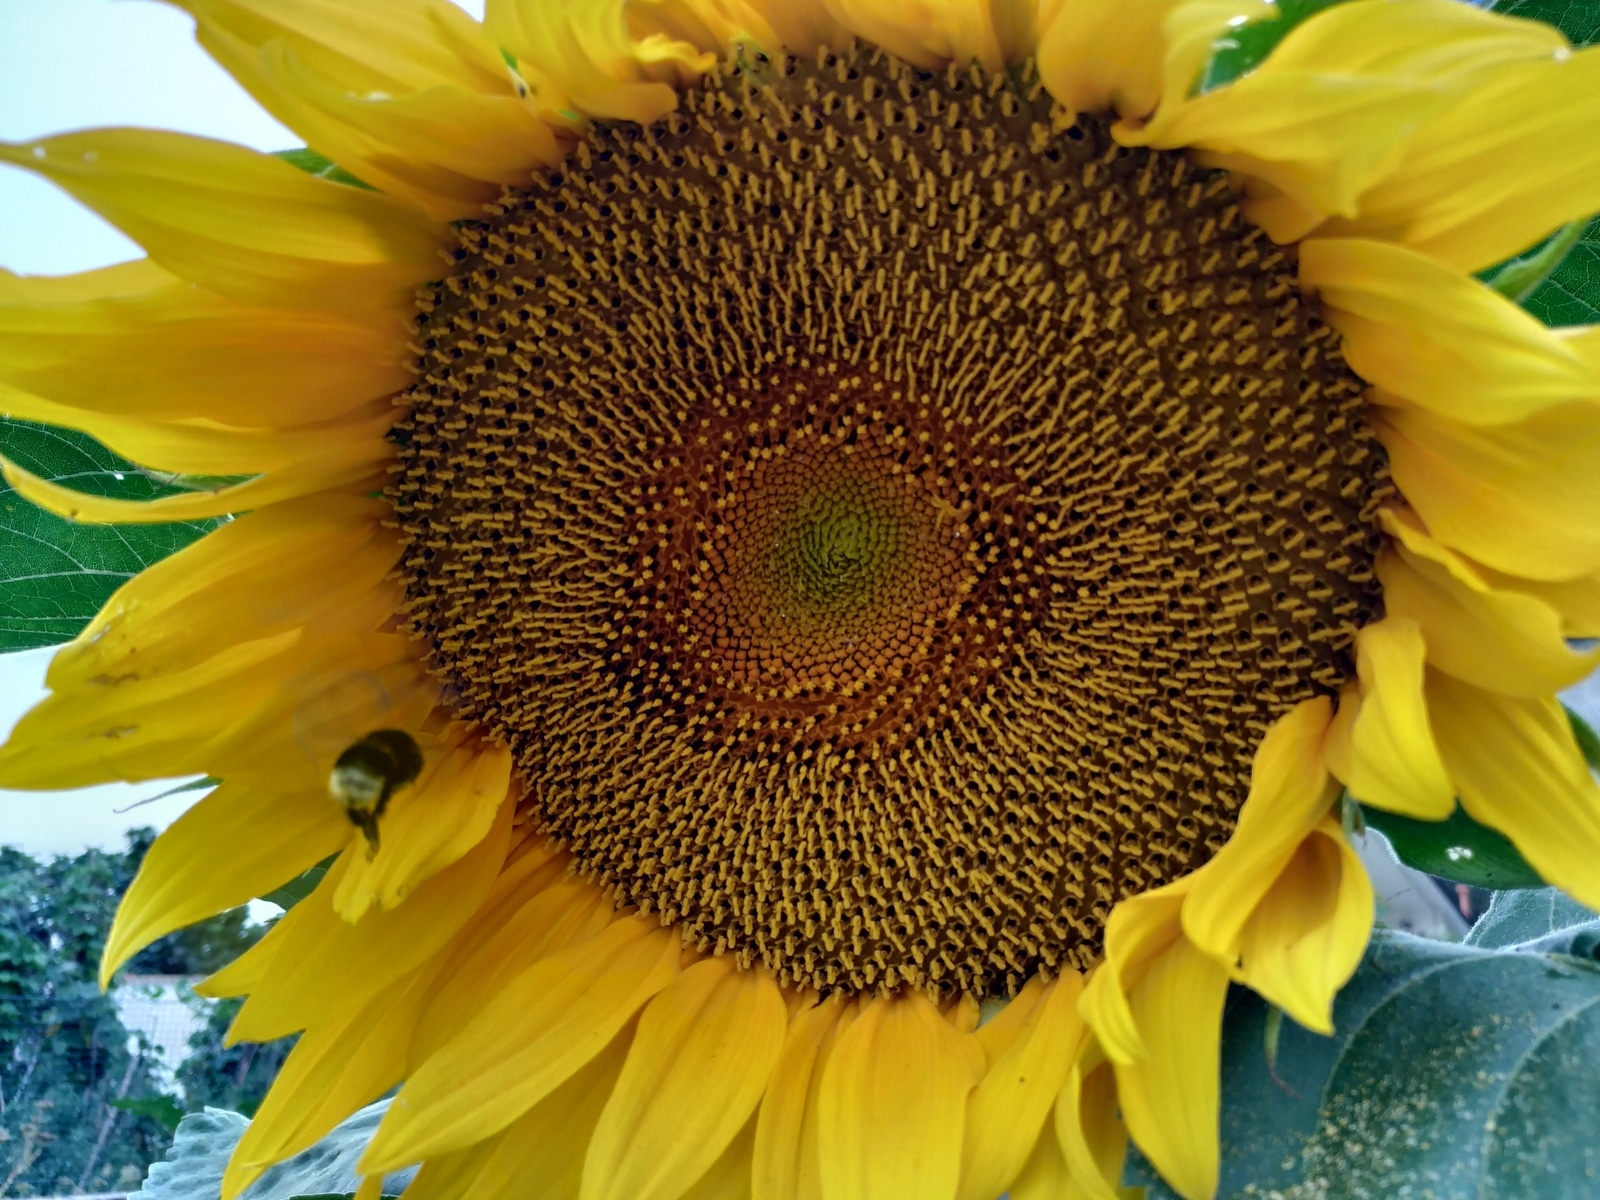 When Should Gardeners Transplant Sunflowers